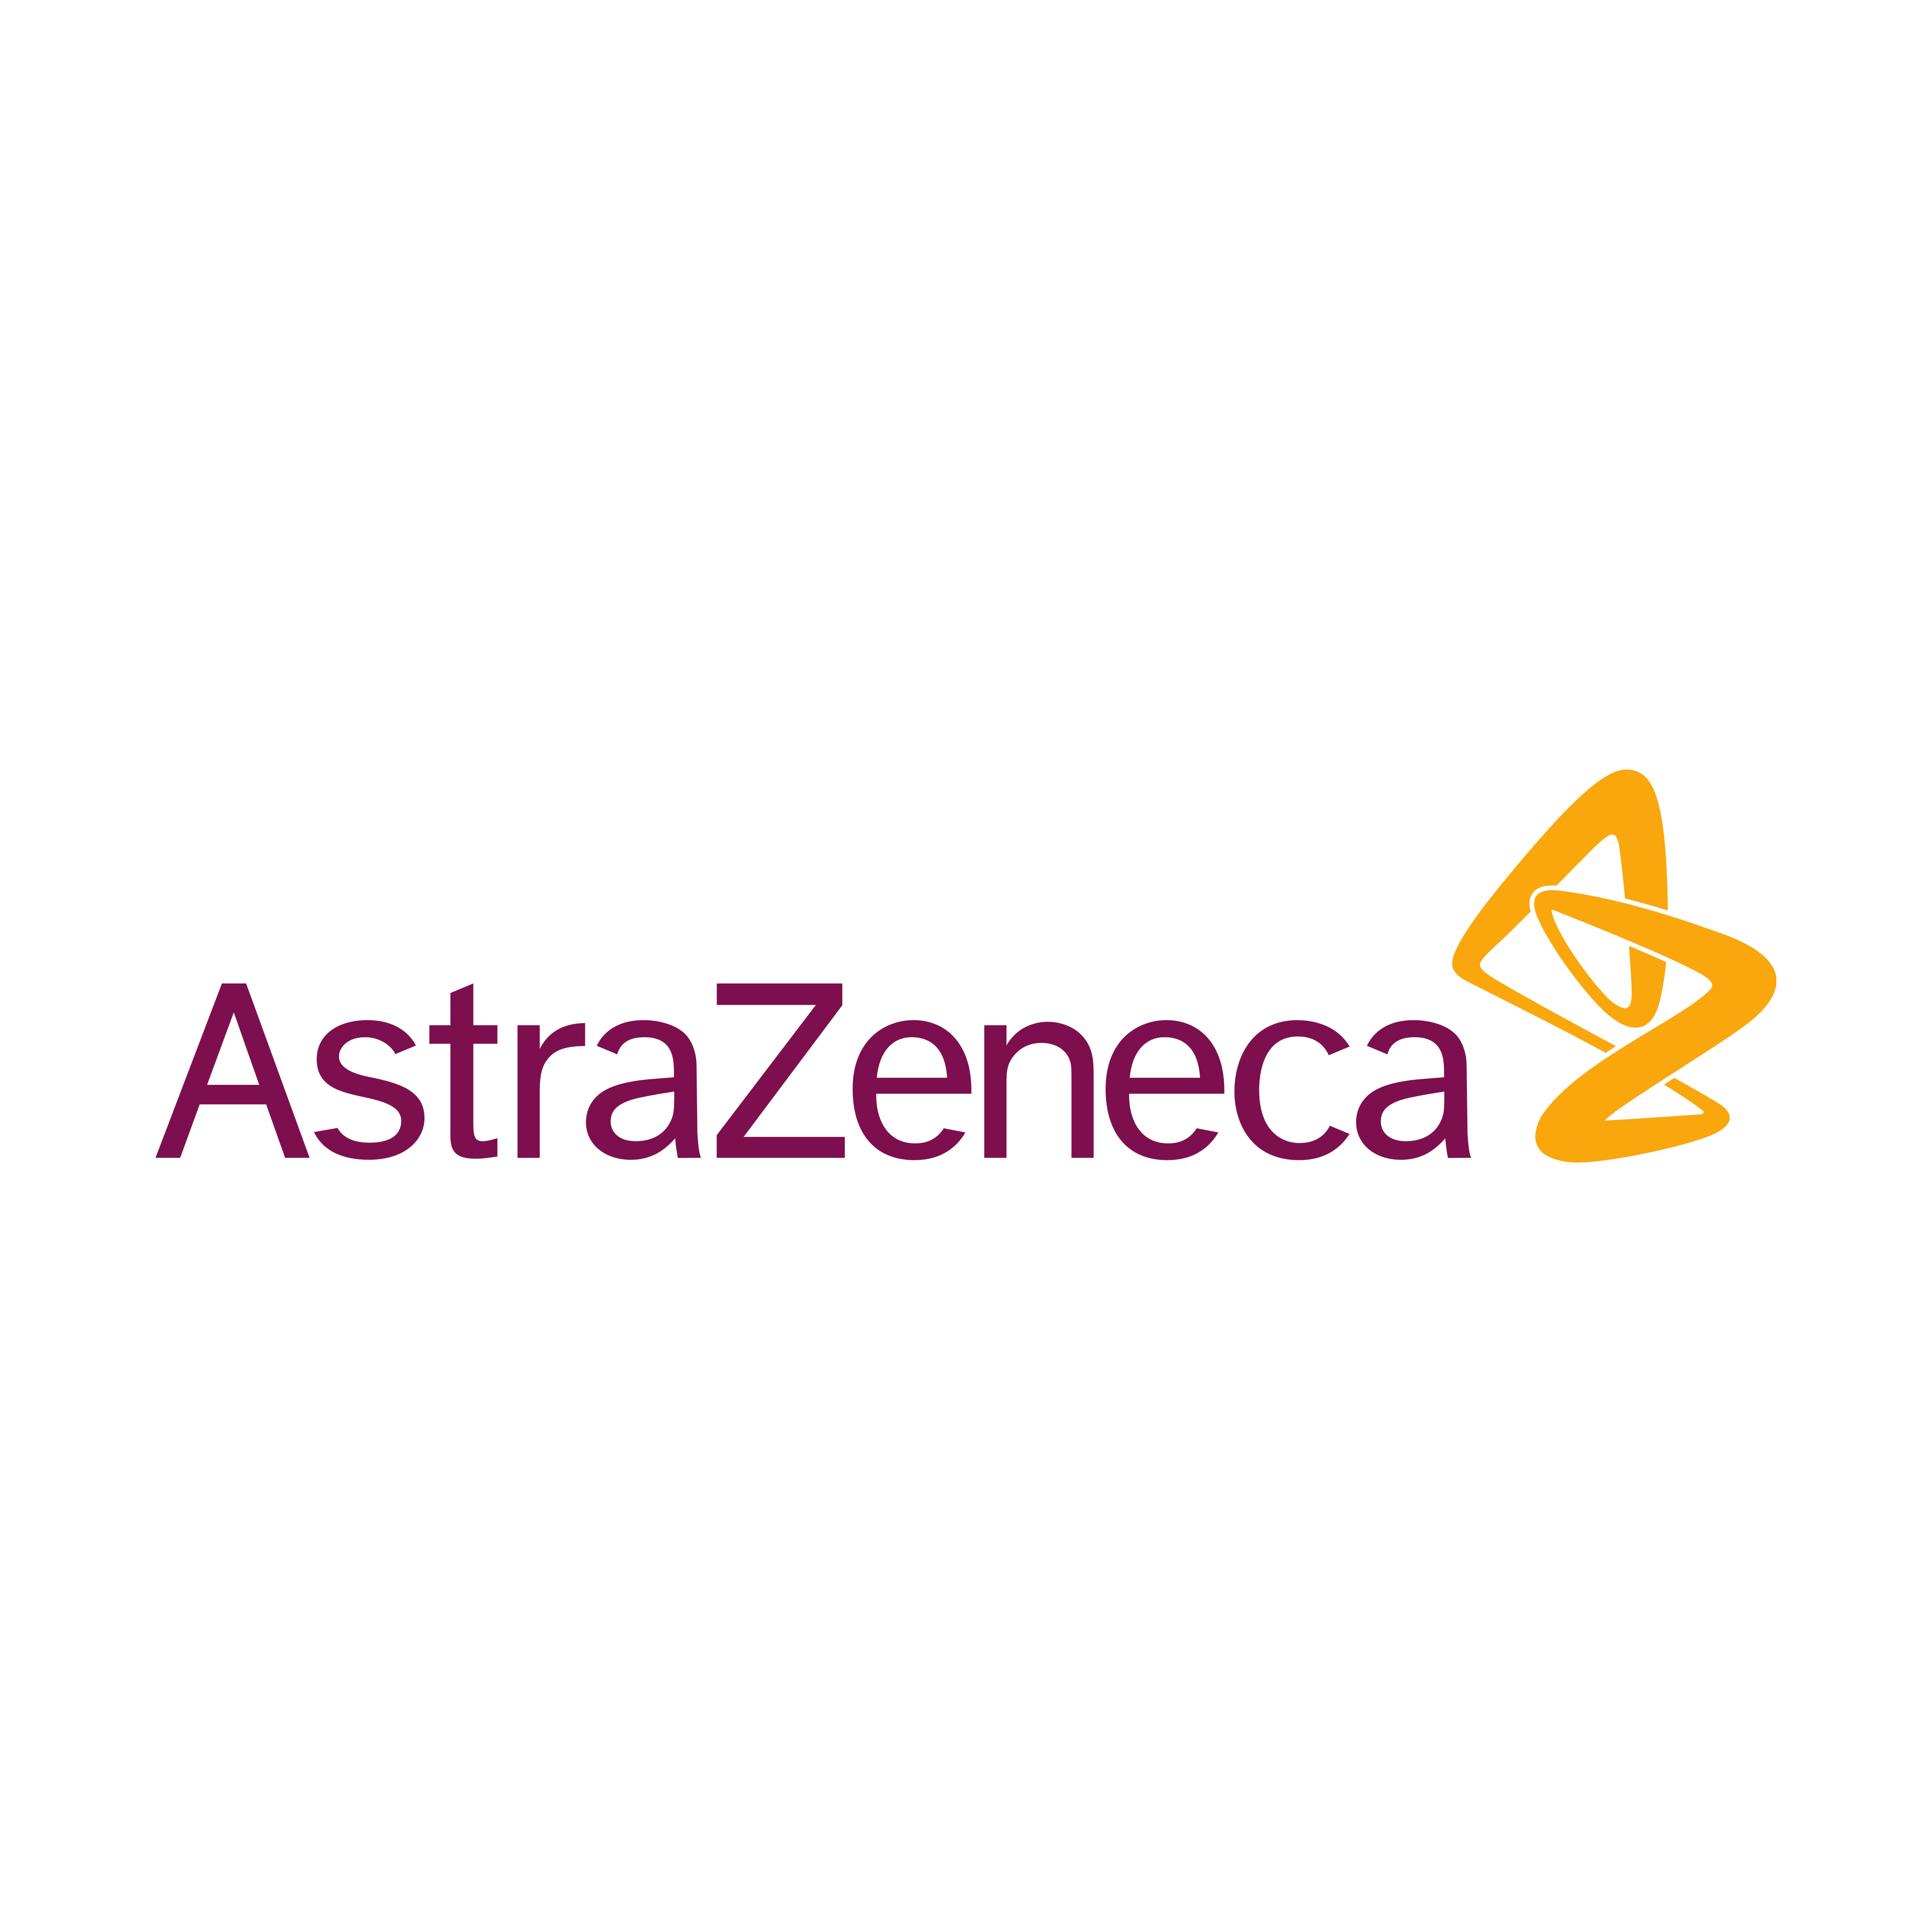 AstraZeneca Logo PNG.